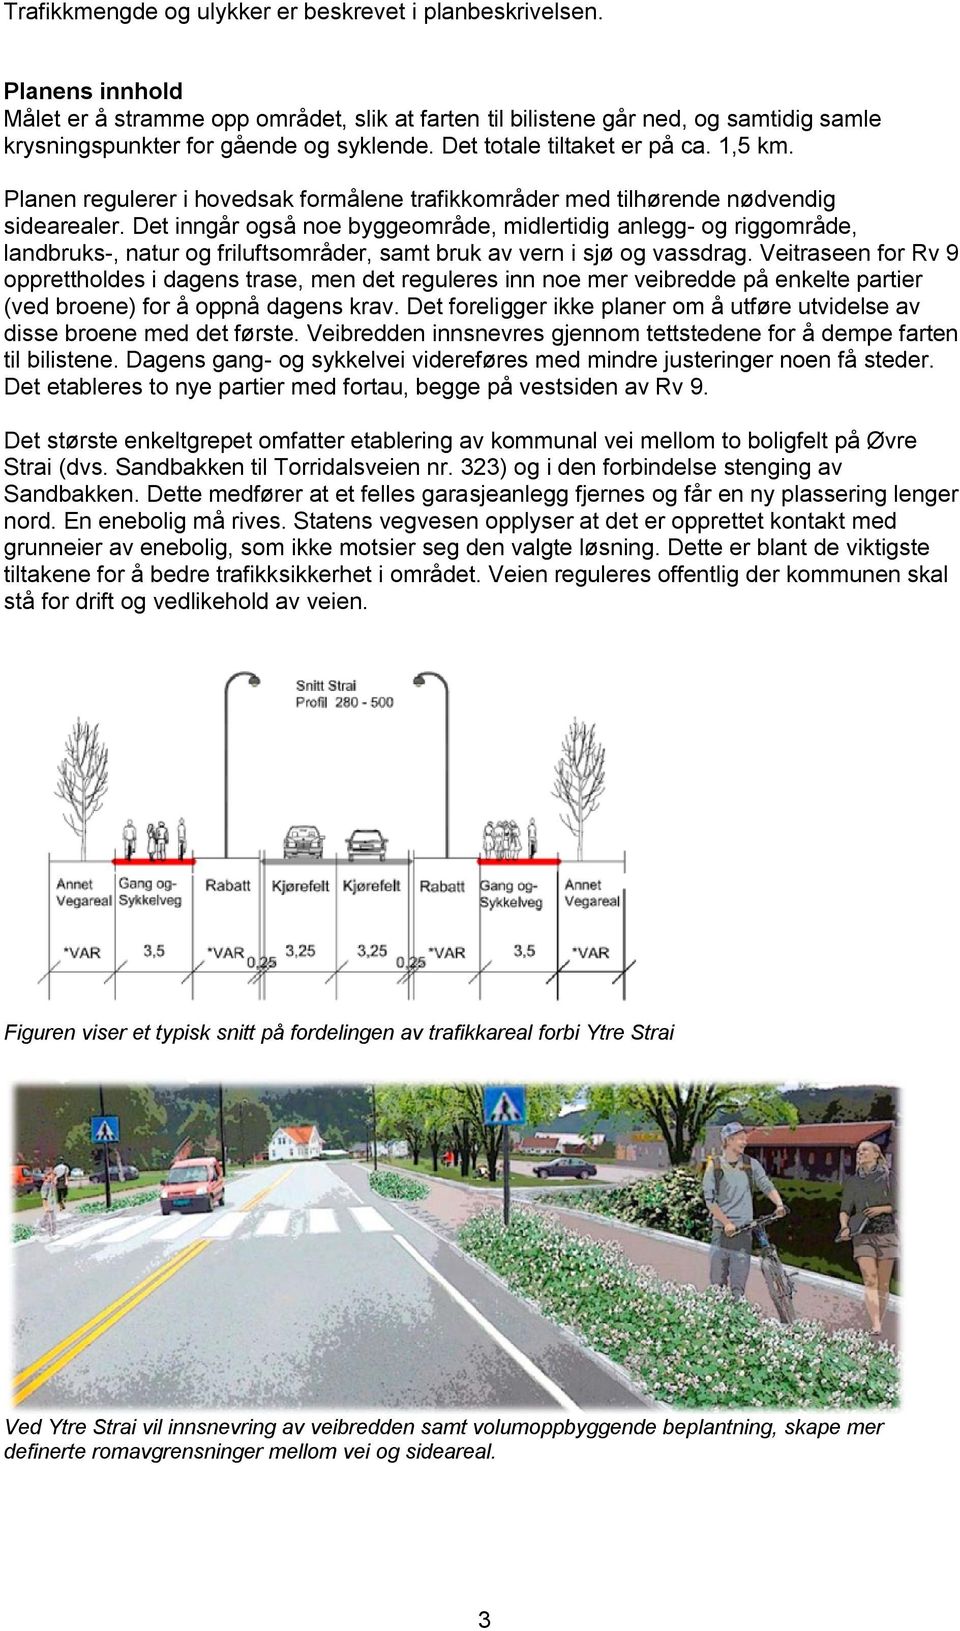 Planen regulerer i hovedsak formålene trafikkområder med tilhørende nødvendig sidearealer.